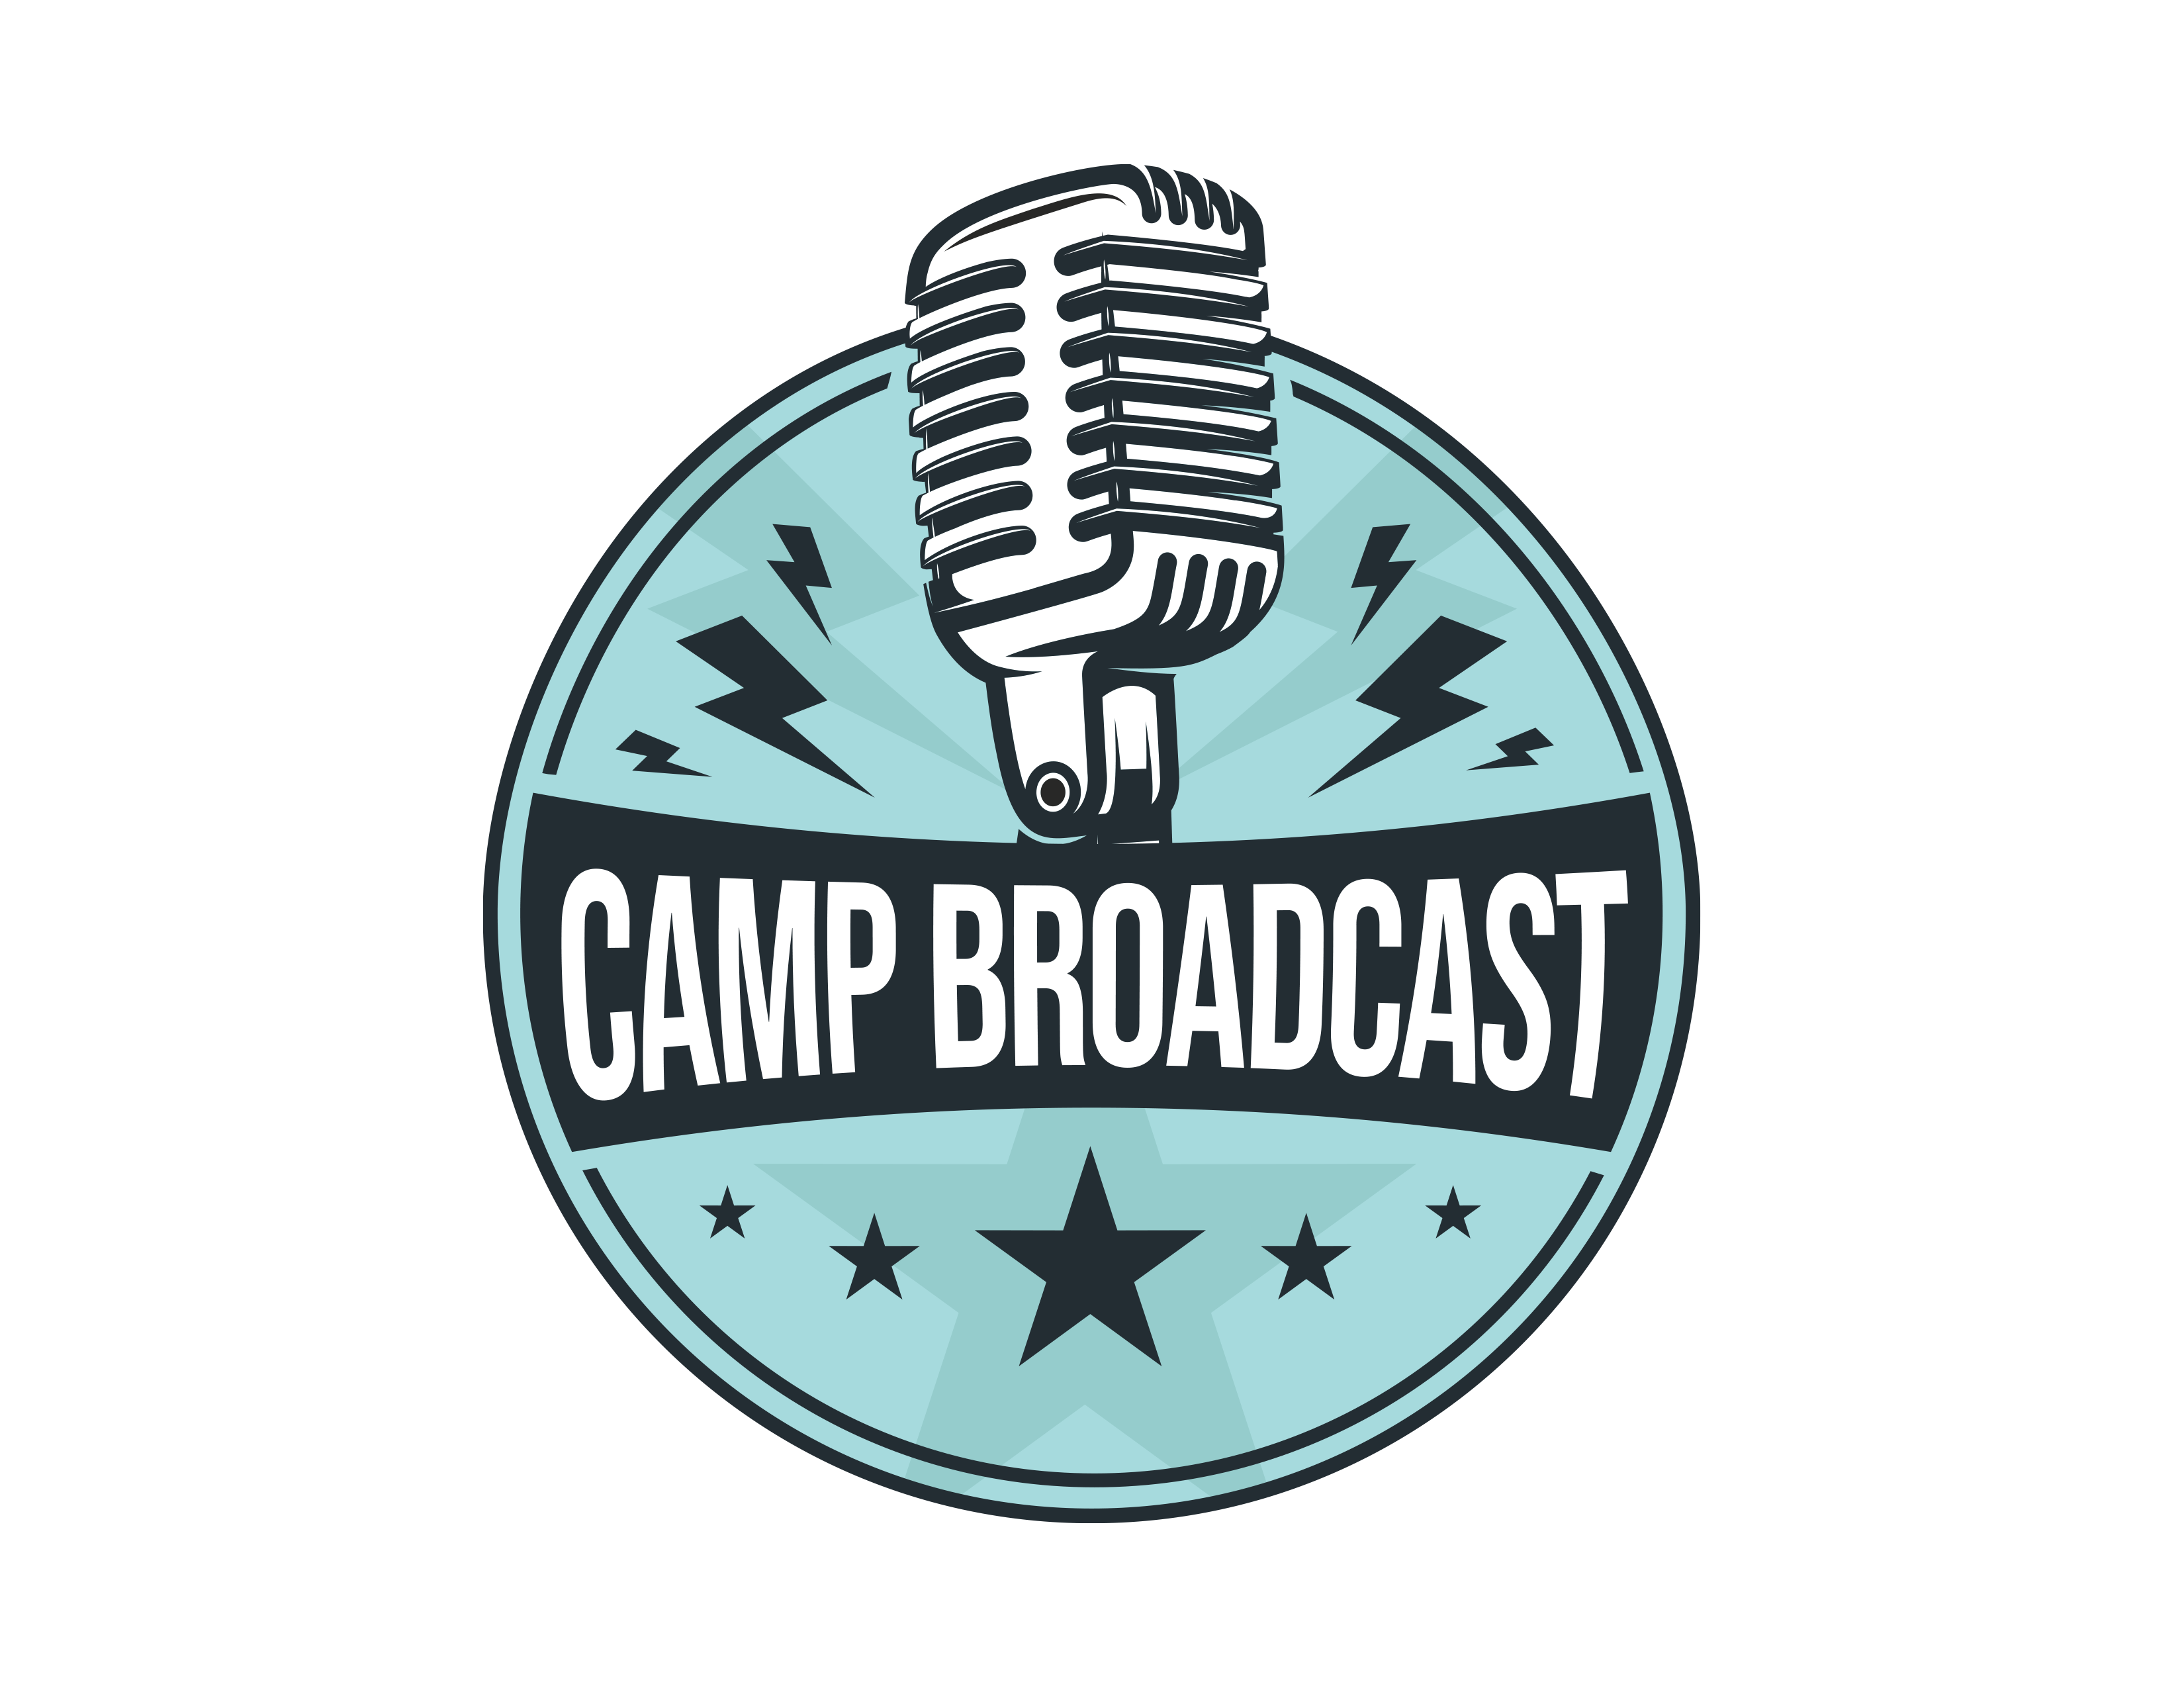 Camp Broadcast logo